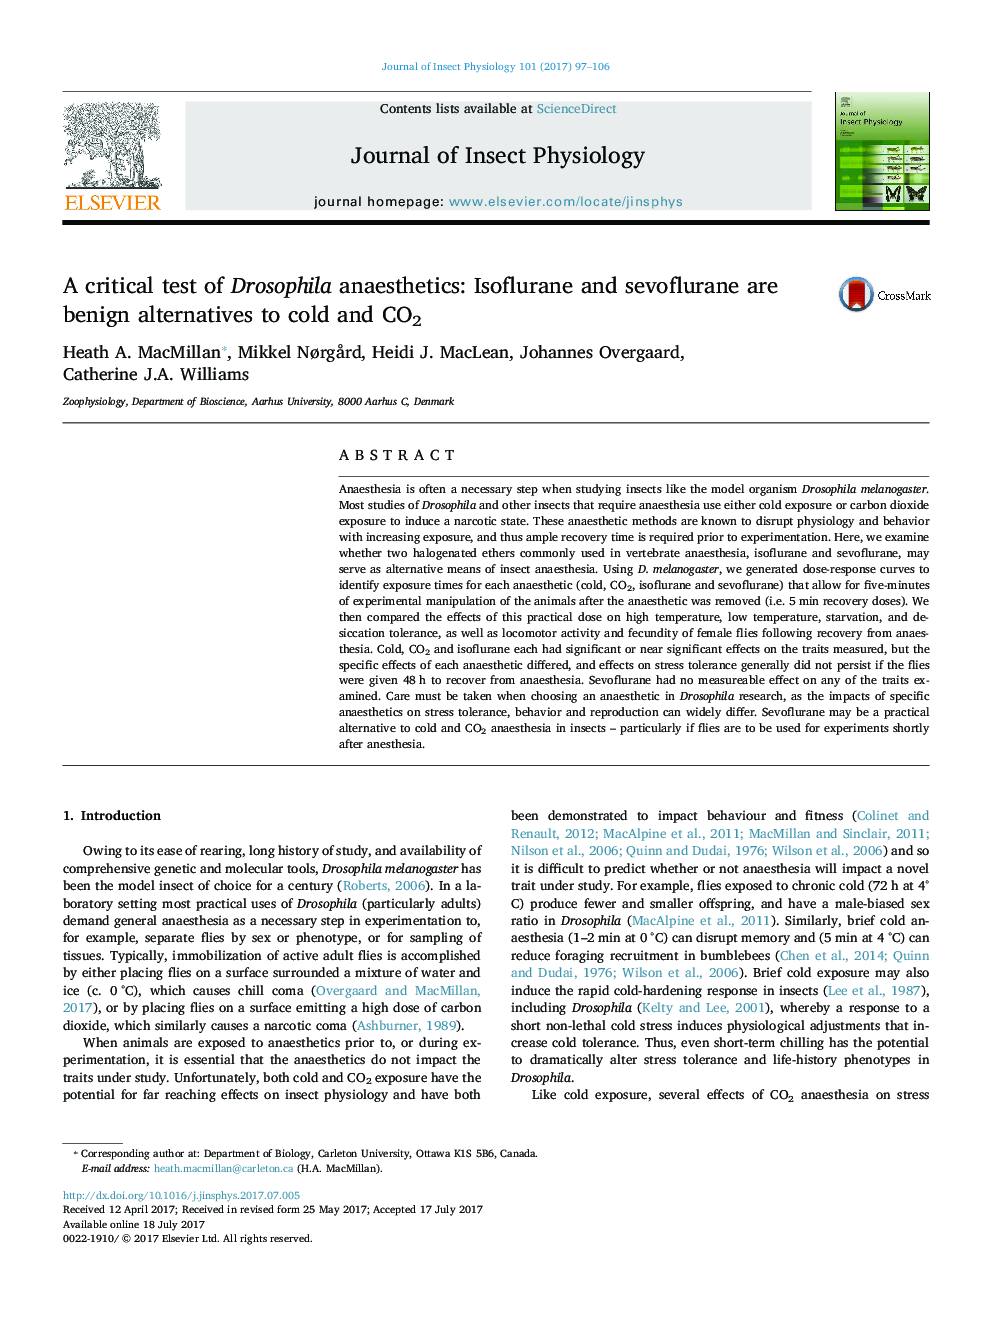 A critical test of Drosophila anaesthetics: Isoflurane and sevoflurane are benign alternatives to cold and CO2